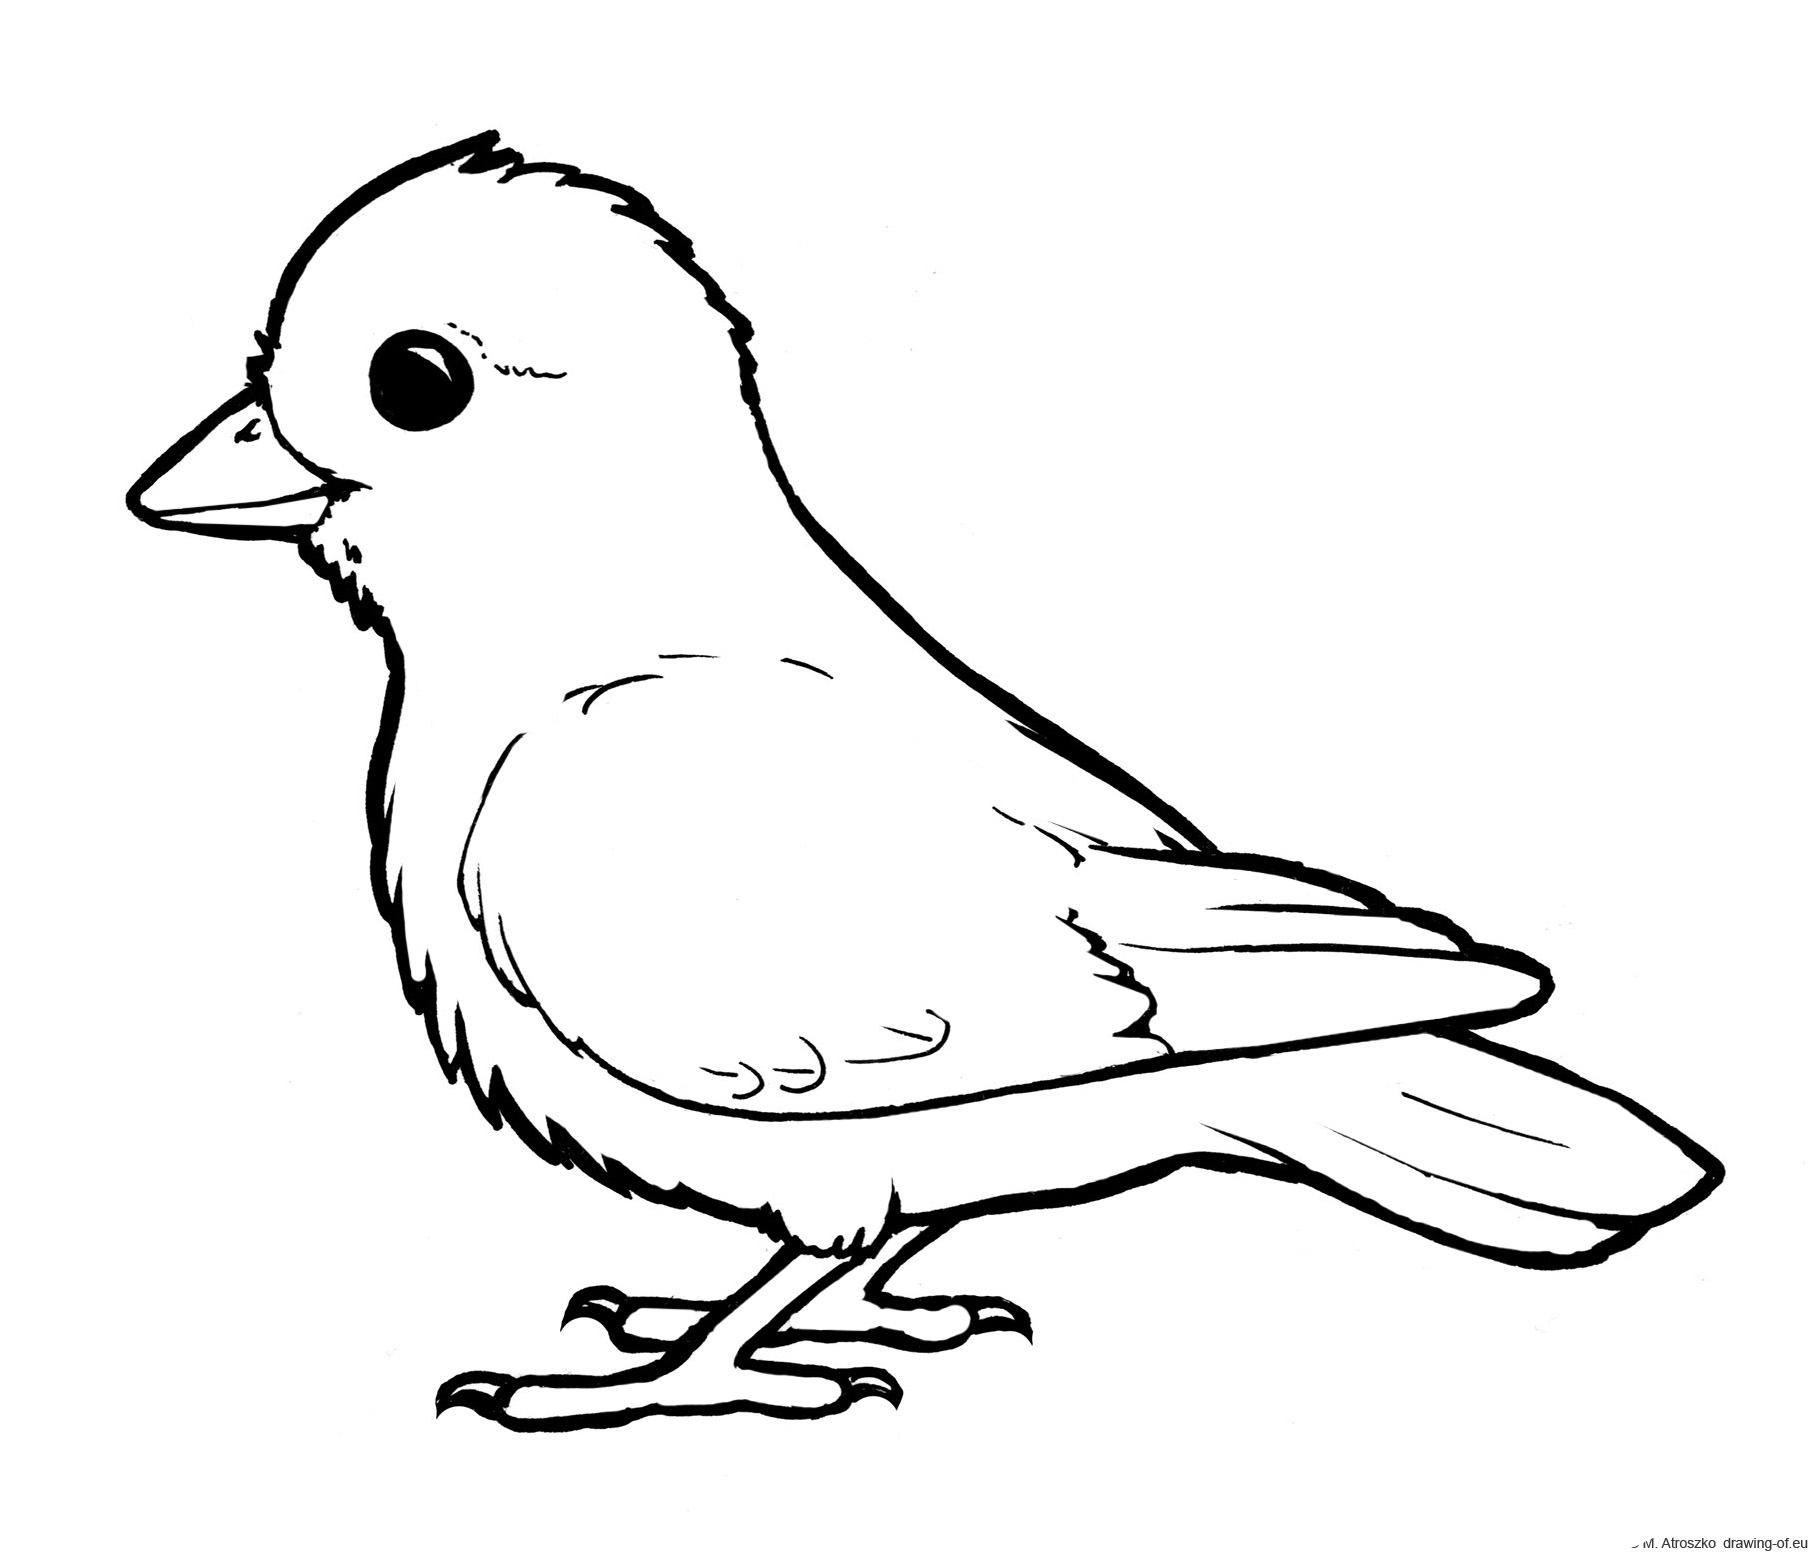 Bird draw - coloring book